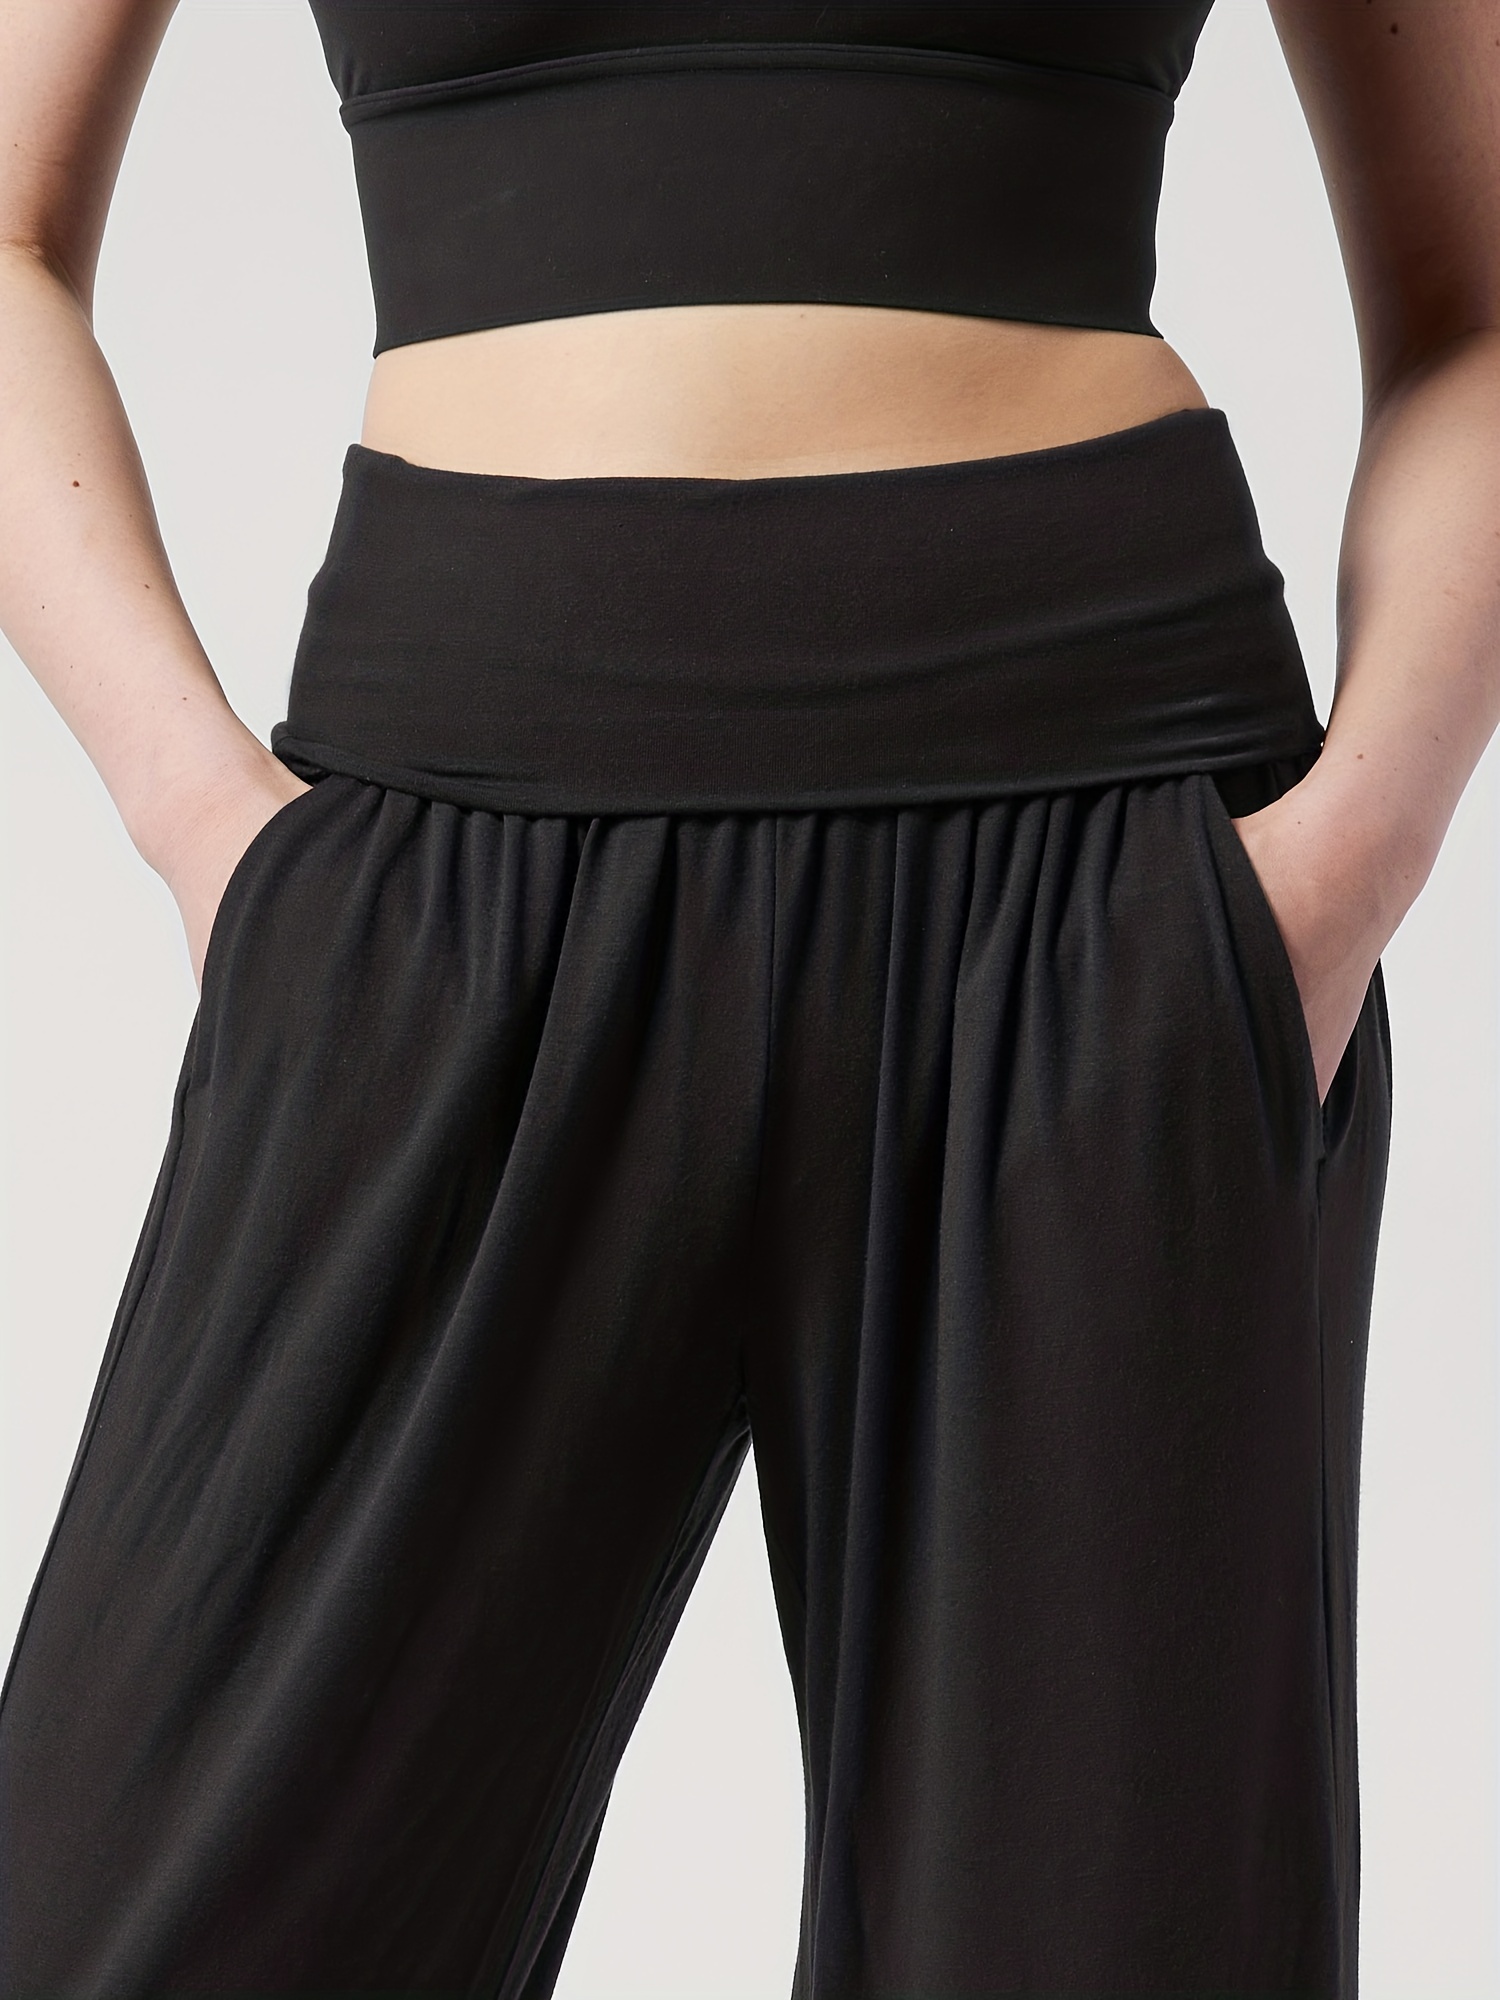 Augper Women's Super High Waist Yoga Pants Slant Pockets Fitness Running  Training Stretch Quick Dry Tight Sports Pants 